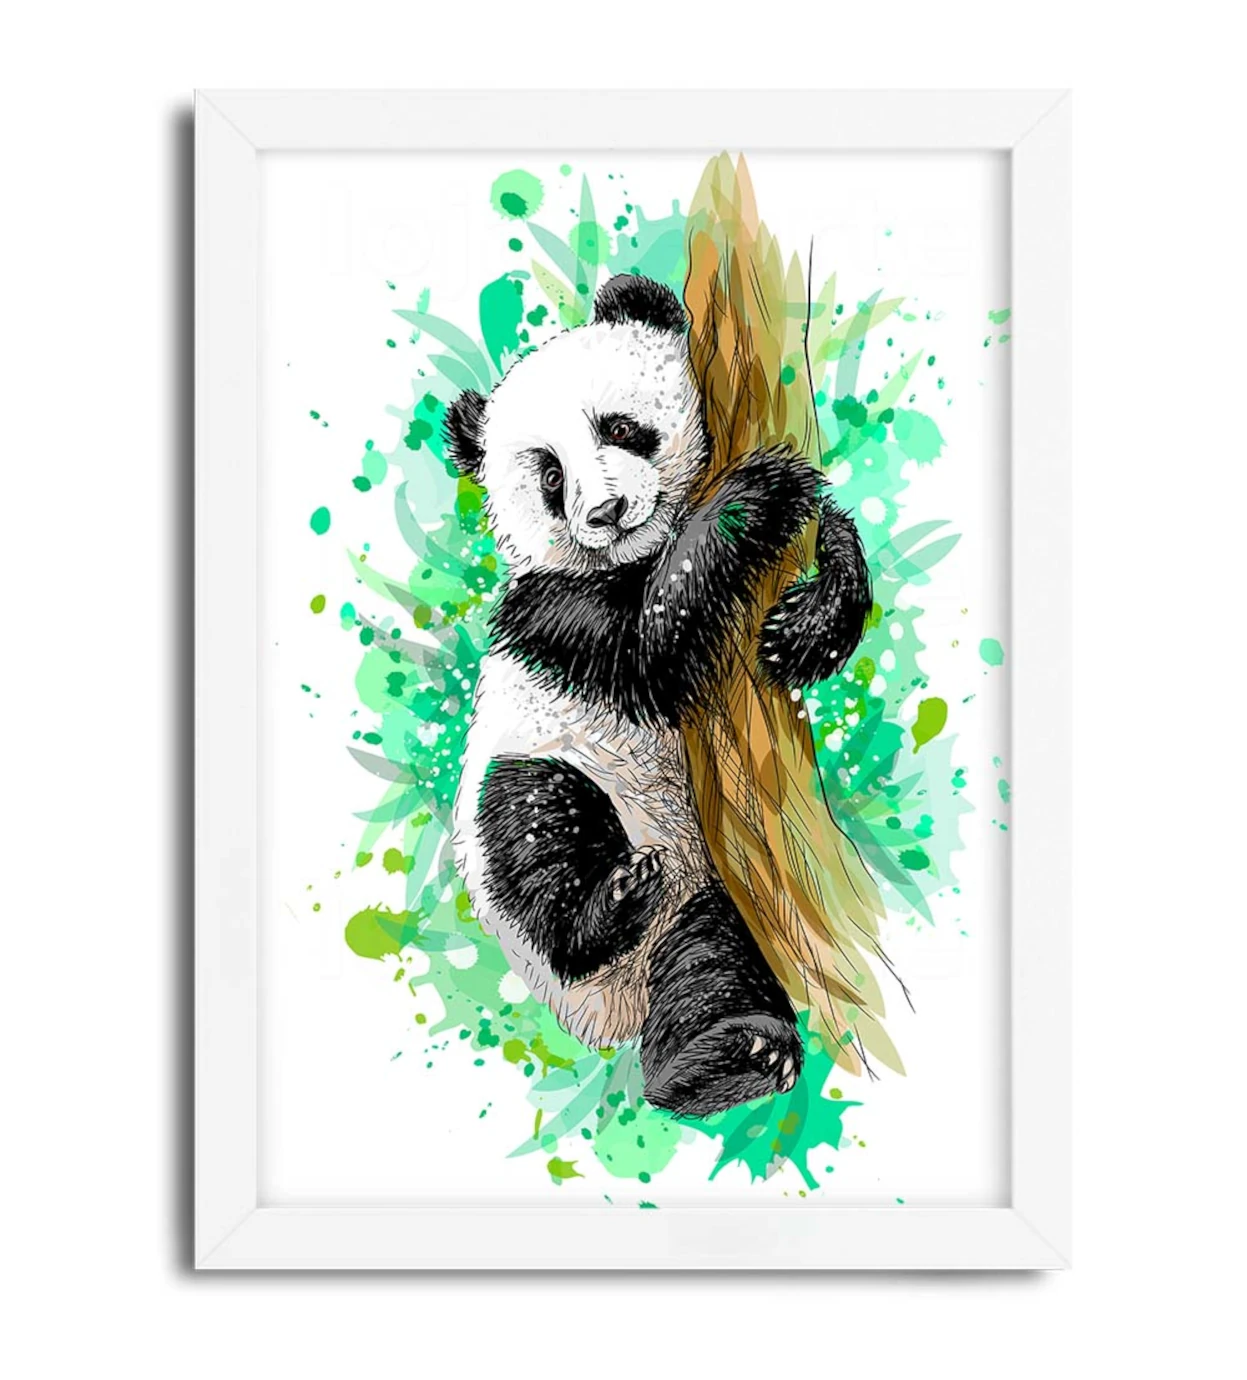 Urso panda desenho realista